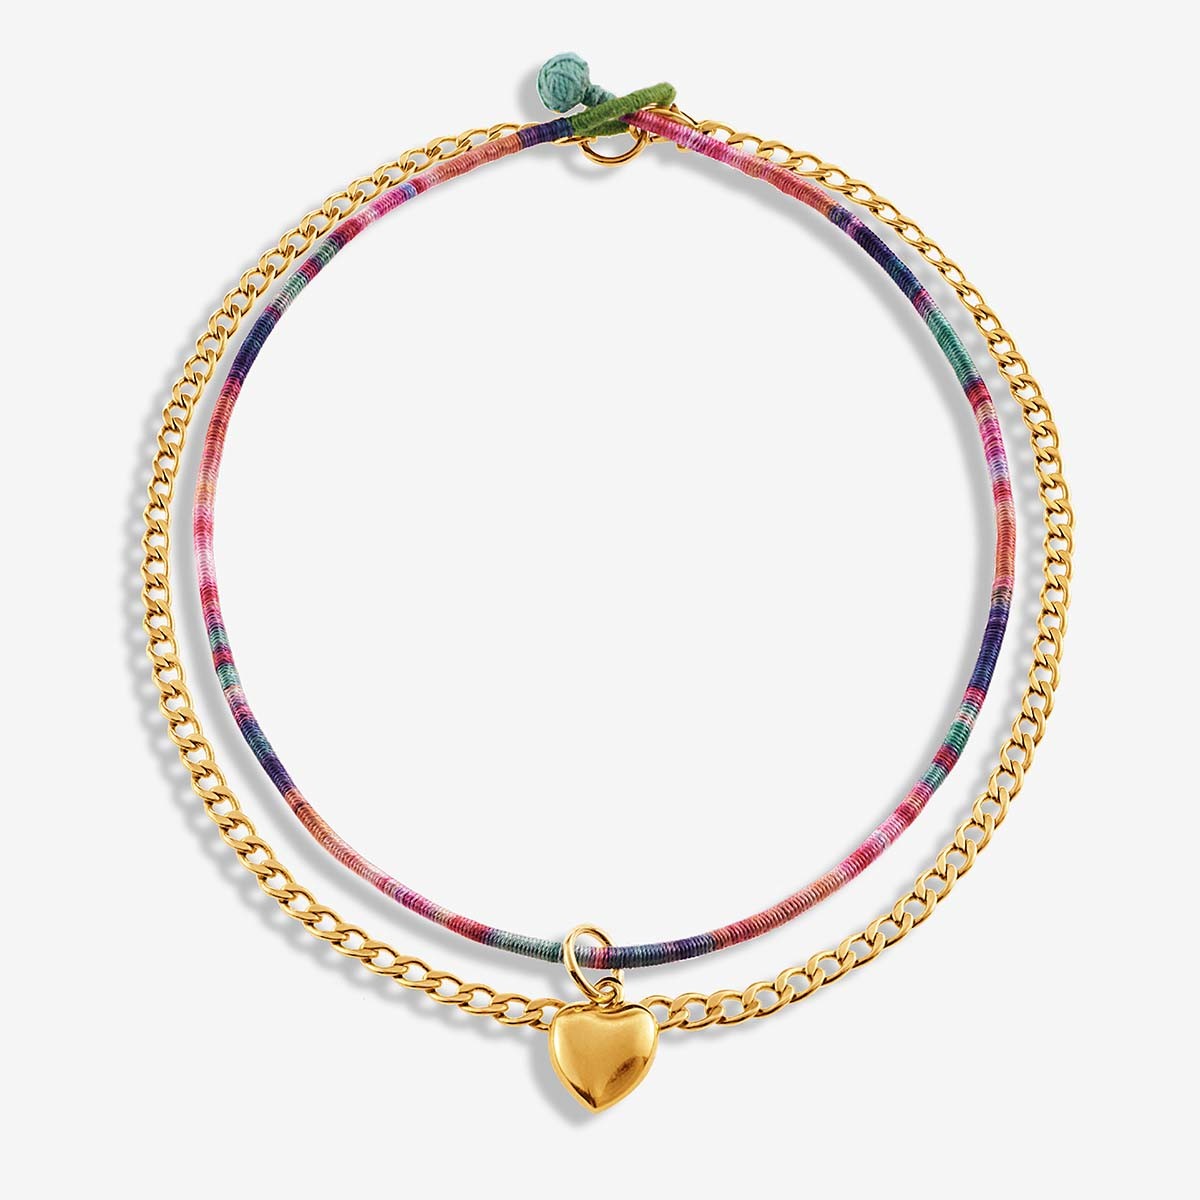 No War Necklace - Halsketten - Multicolor - 18k vergoldet